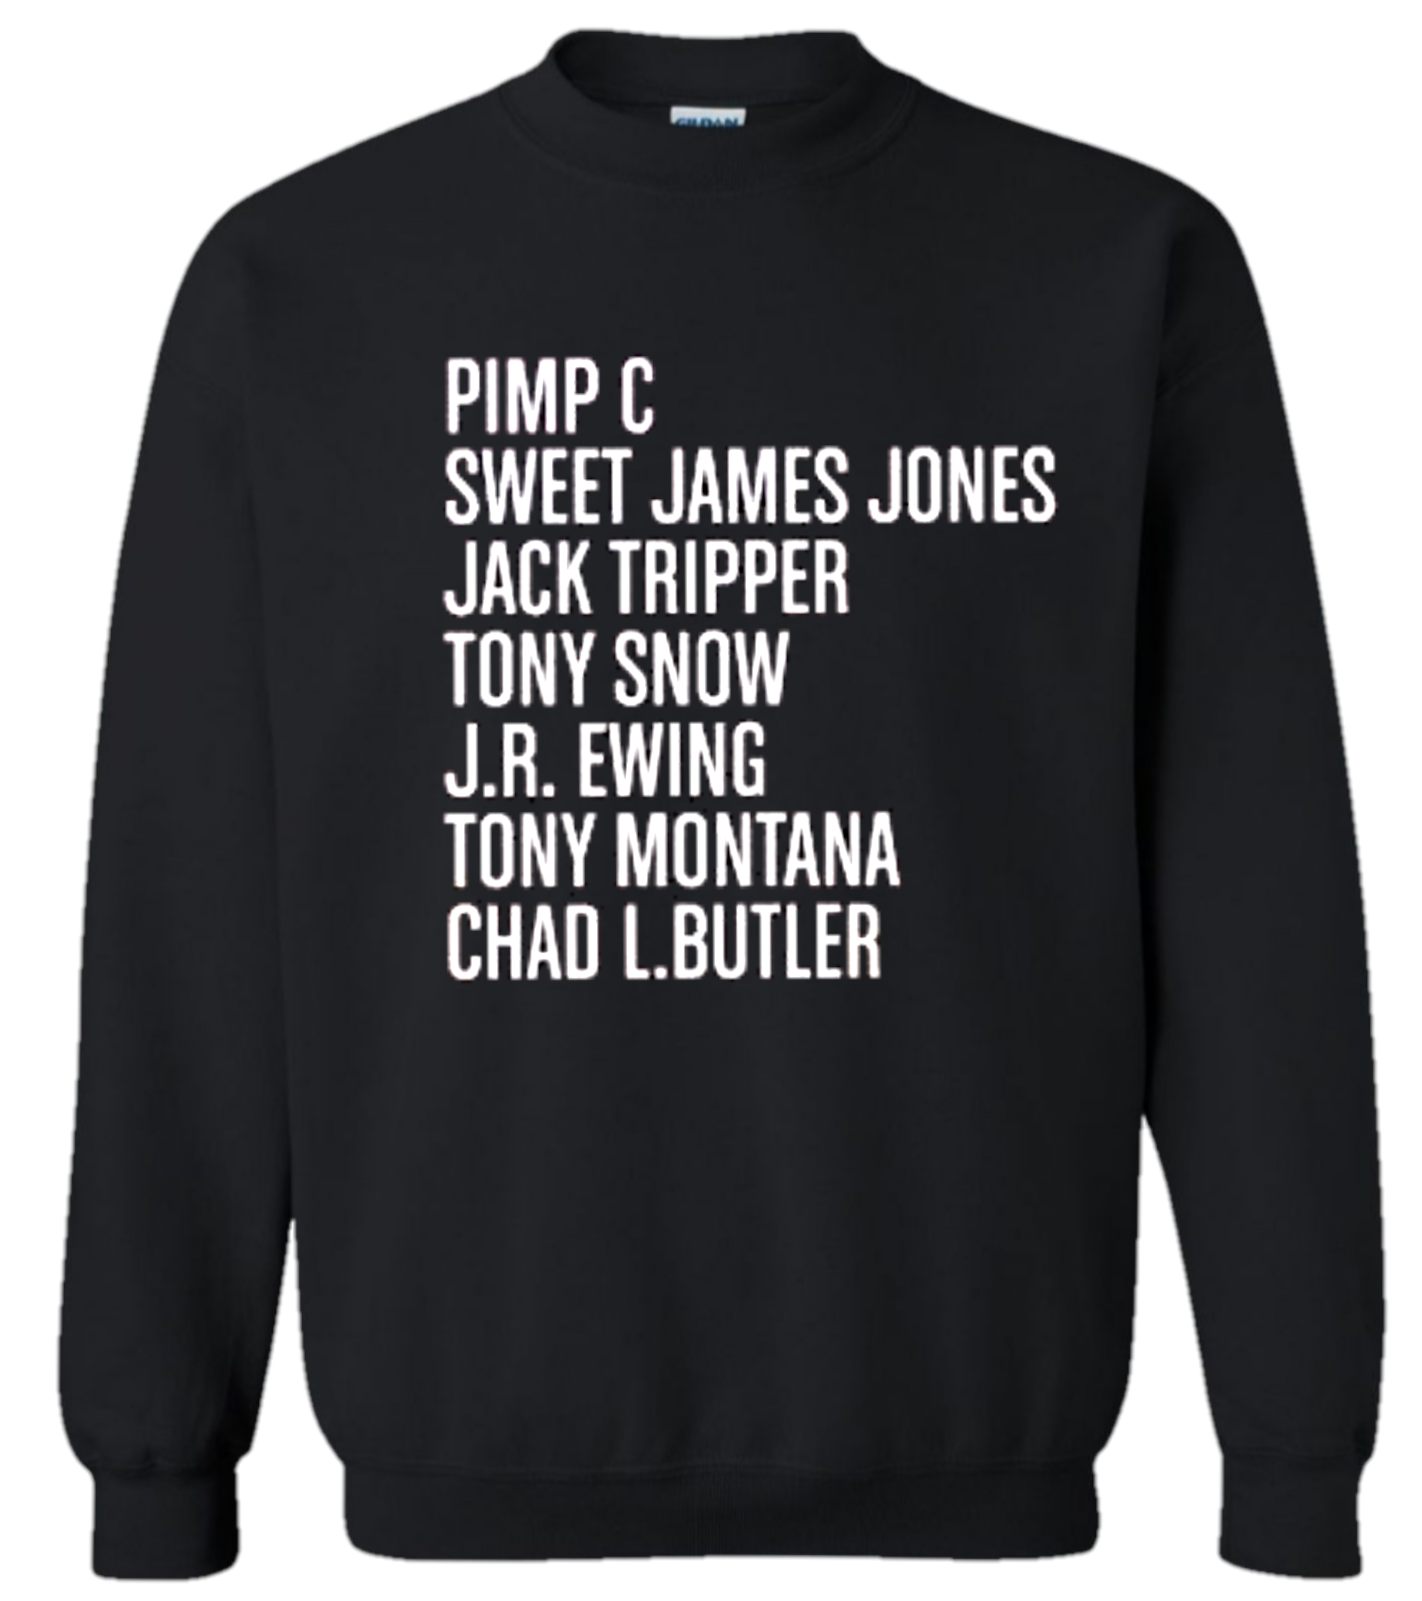 Pimp C, Sweet James Jones, Jack Tripper, Tony Snow, J.R. Ewing, Tony Montana, or just Chad L Butler black crewneck sweatshirt